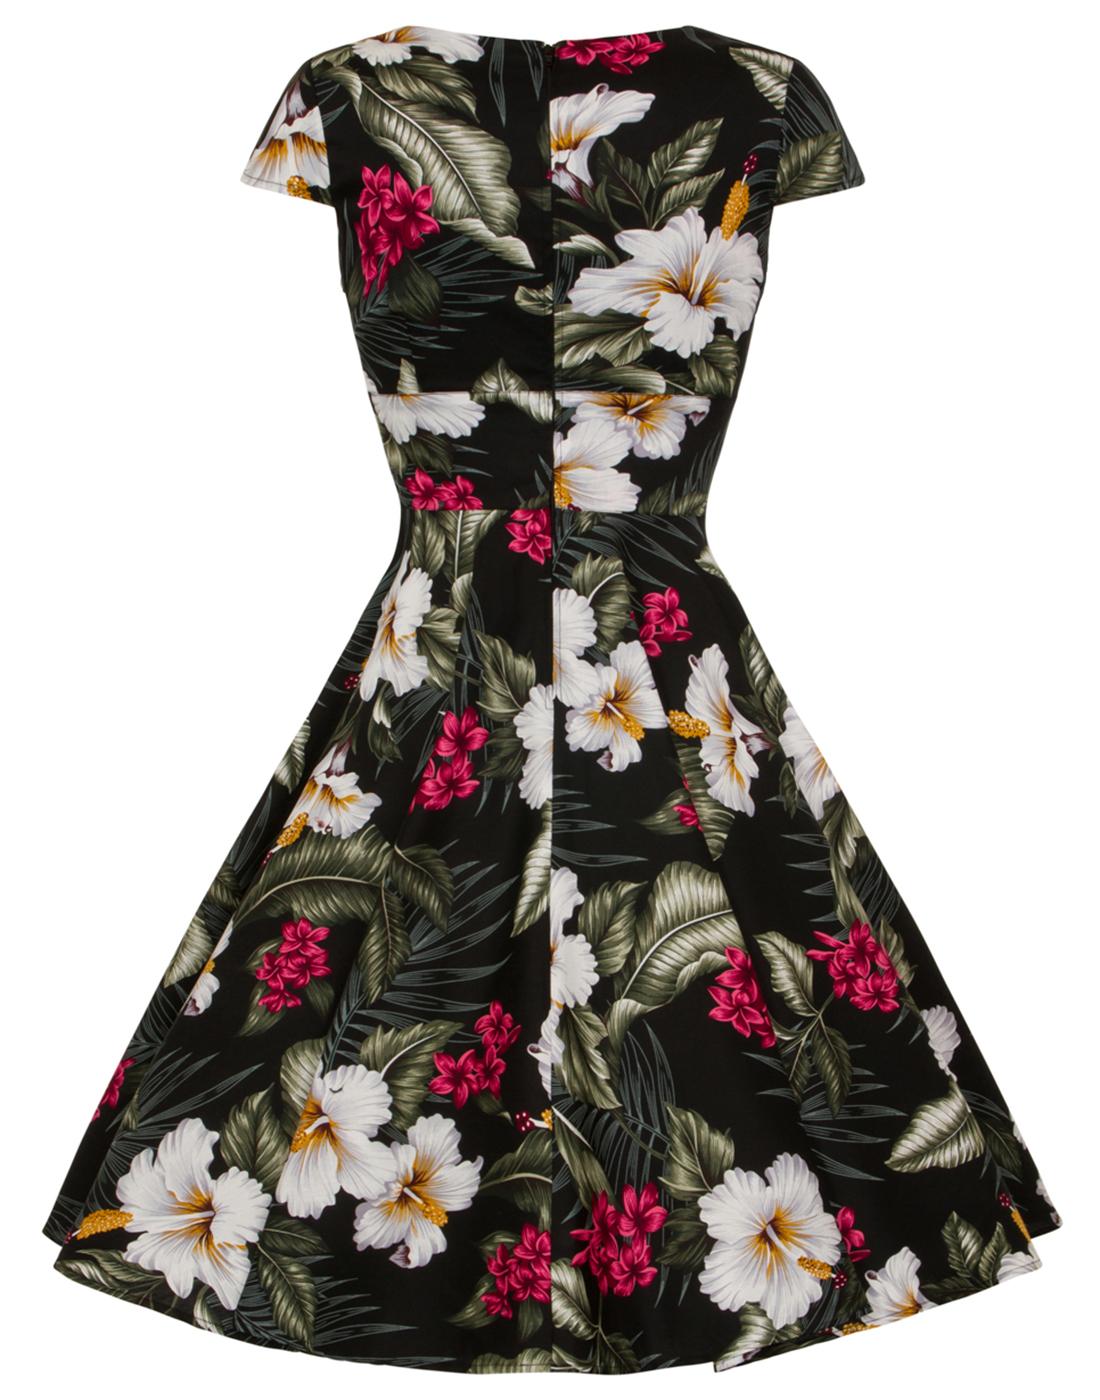 HELL BUNNY Kalei Vintage Retro Floral 50s Dress in Black